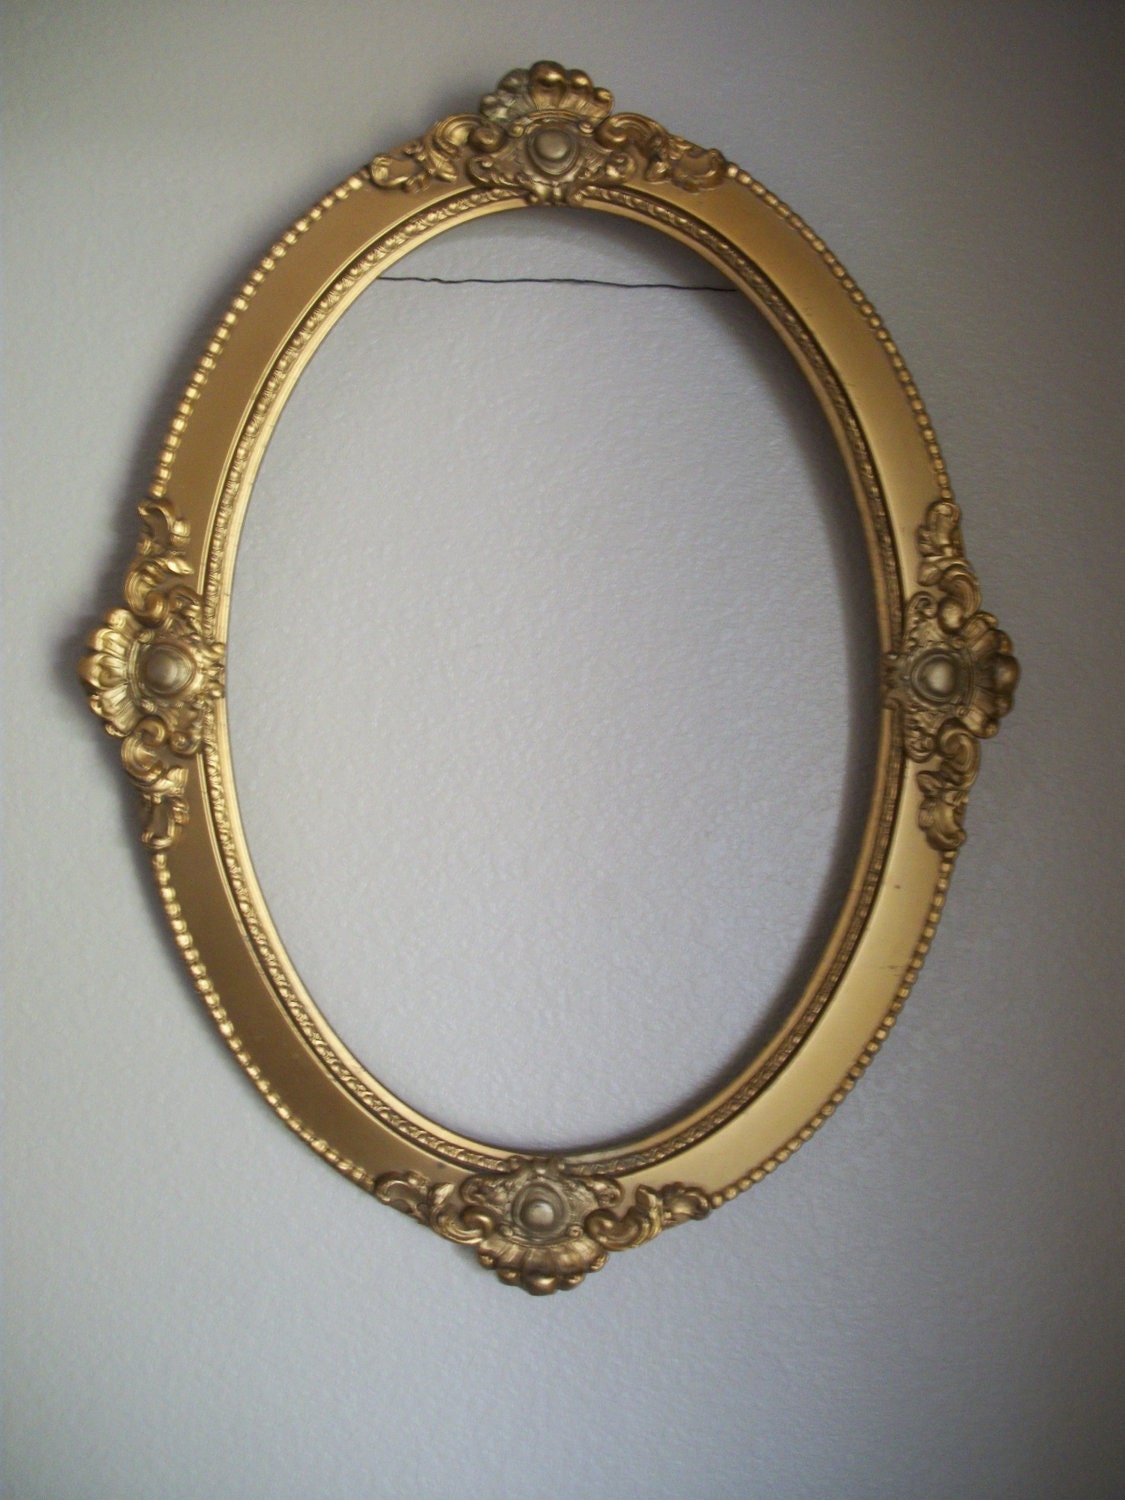 SALE Vintage Wood Ornate Gesso Oval Picture Frame Was 35